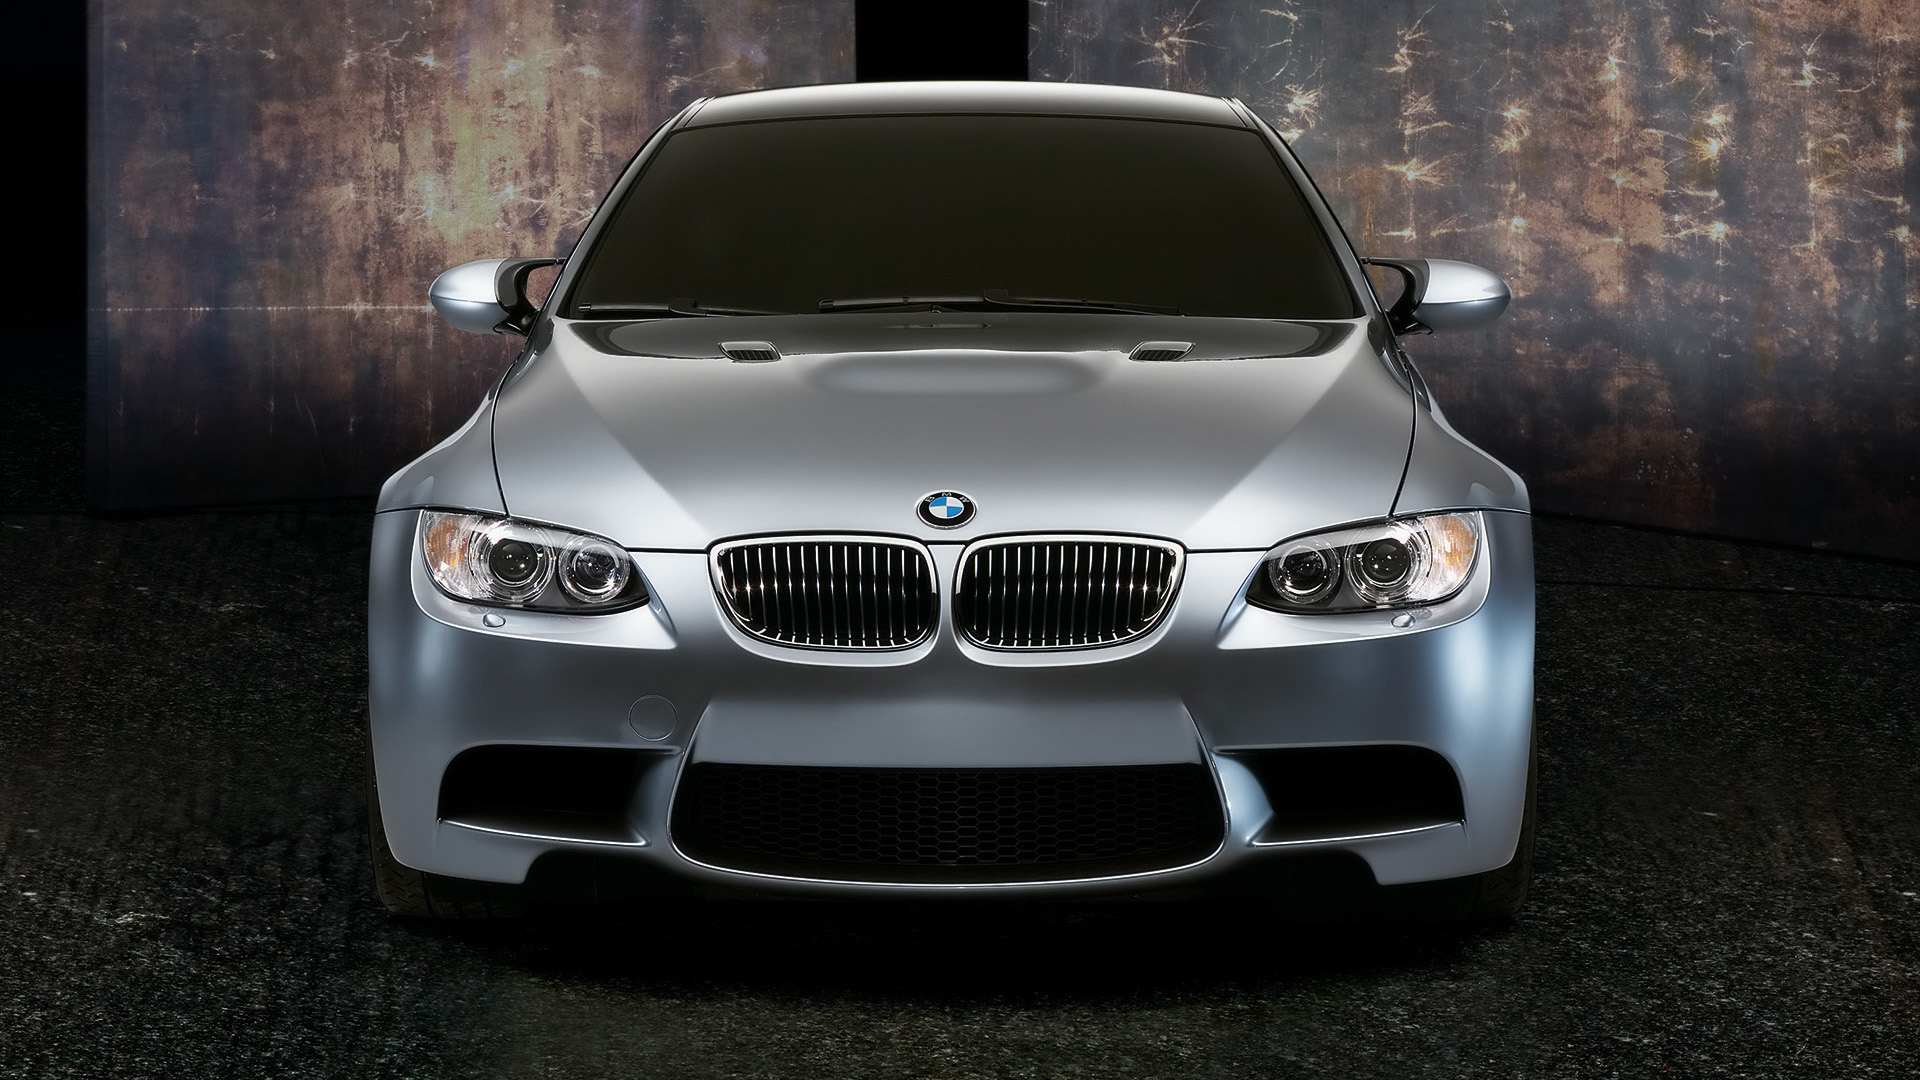  2007 BMW M3 Concept Wallpaper.